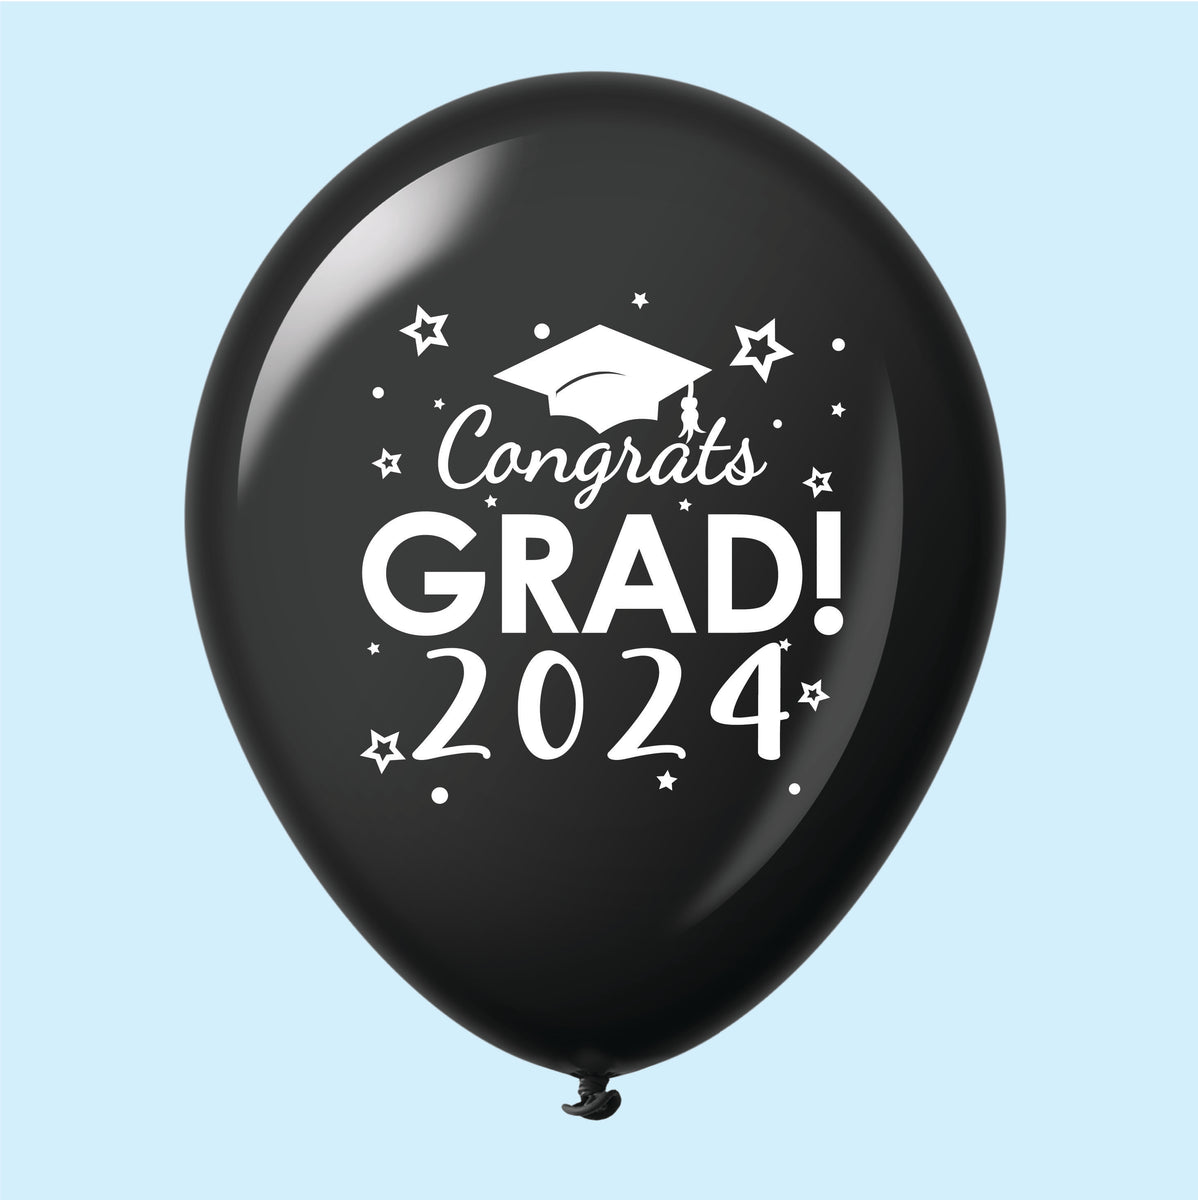 11" Congrats Grad 2024 Latex Balloons 25 Count Black Bargain Balloons